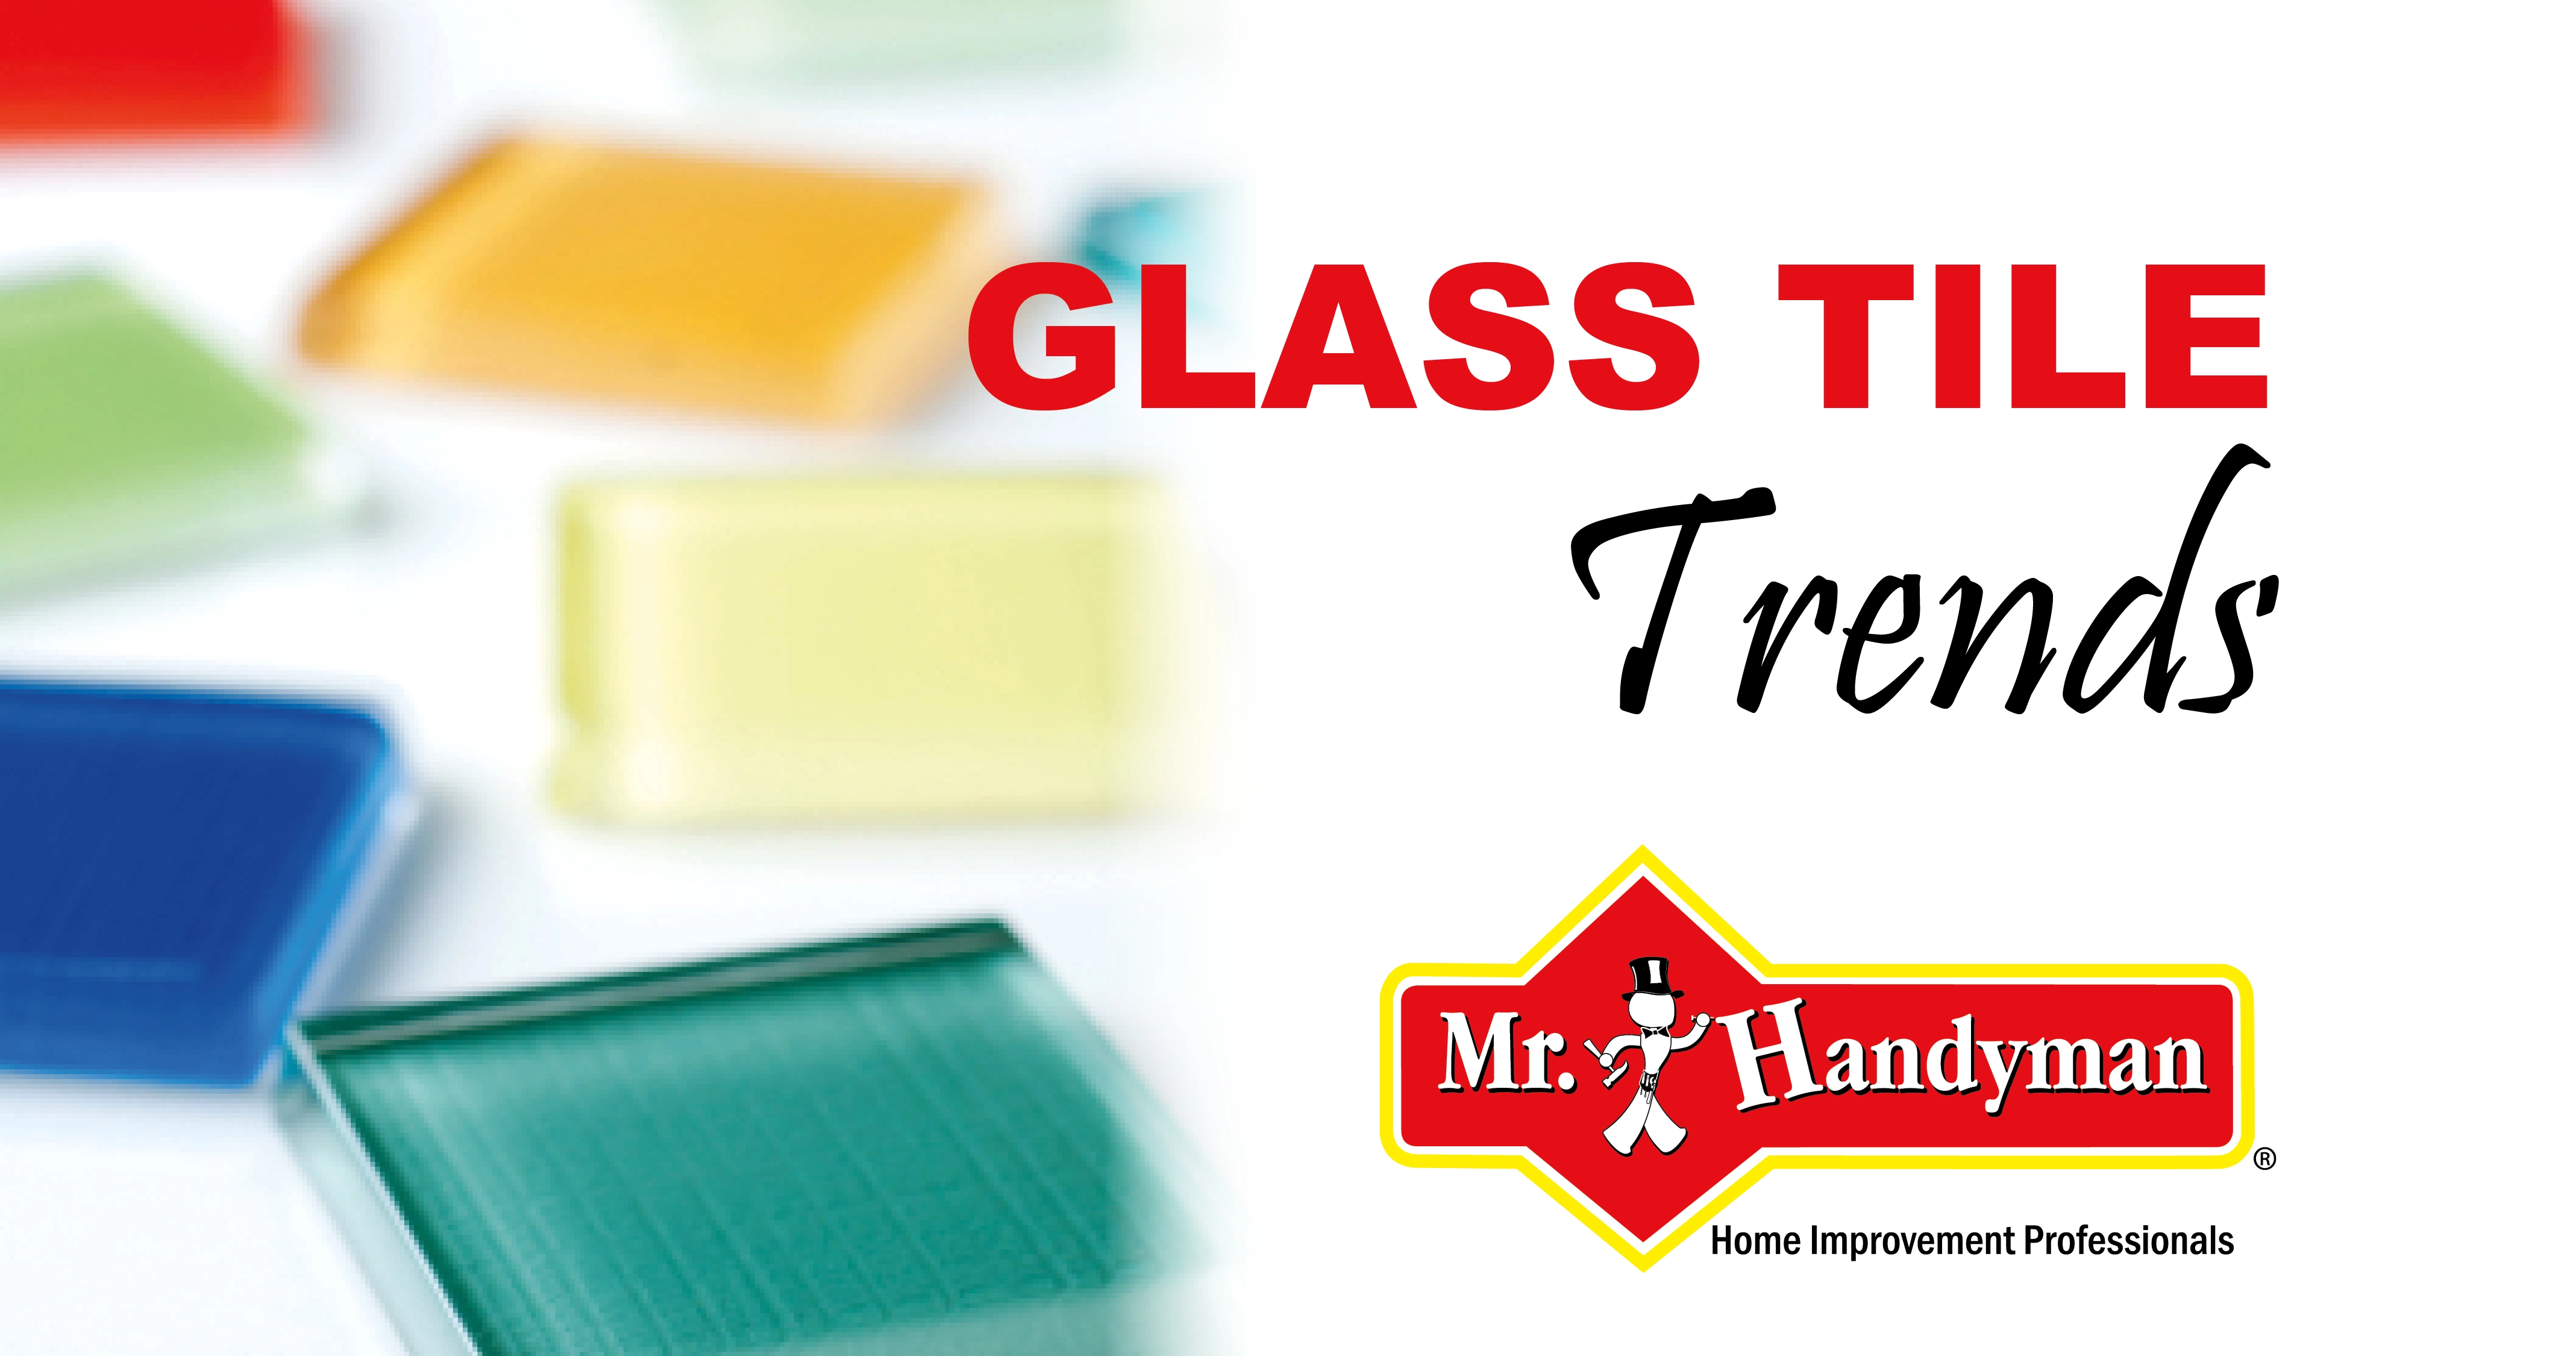 Glass tile trends